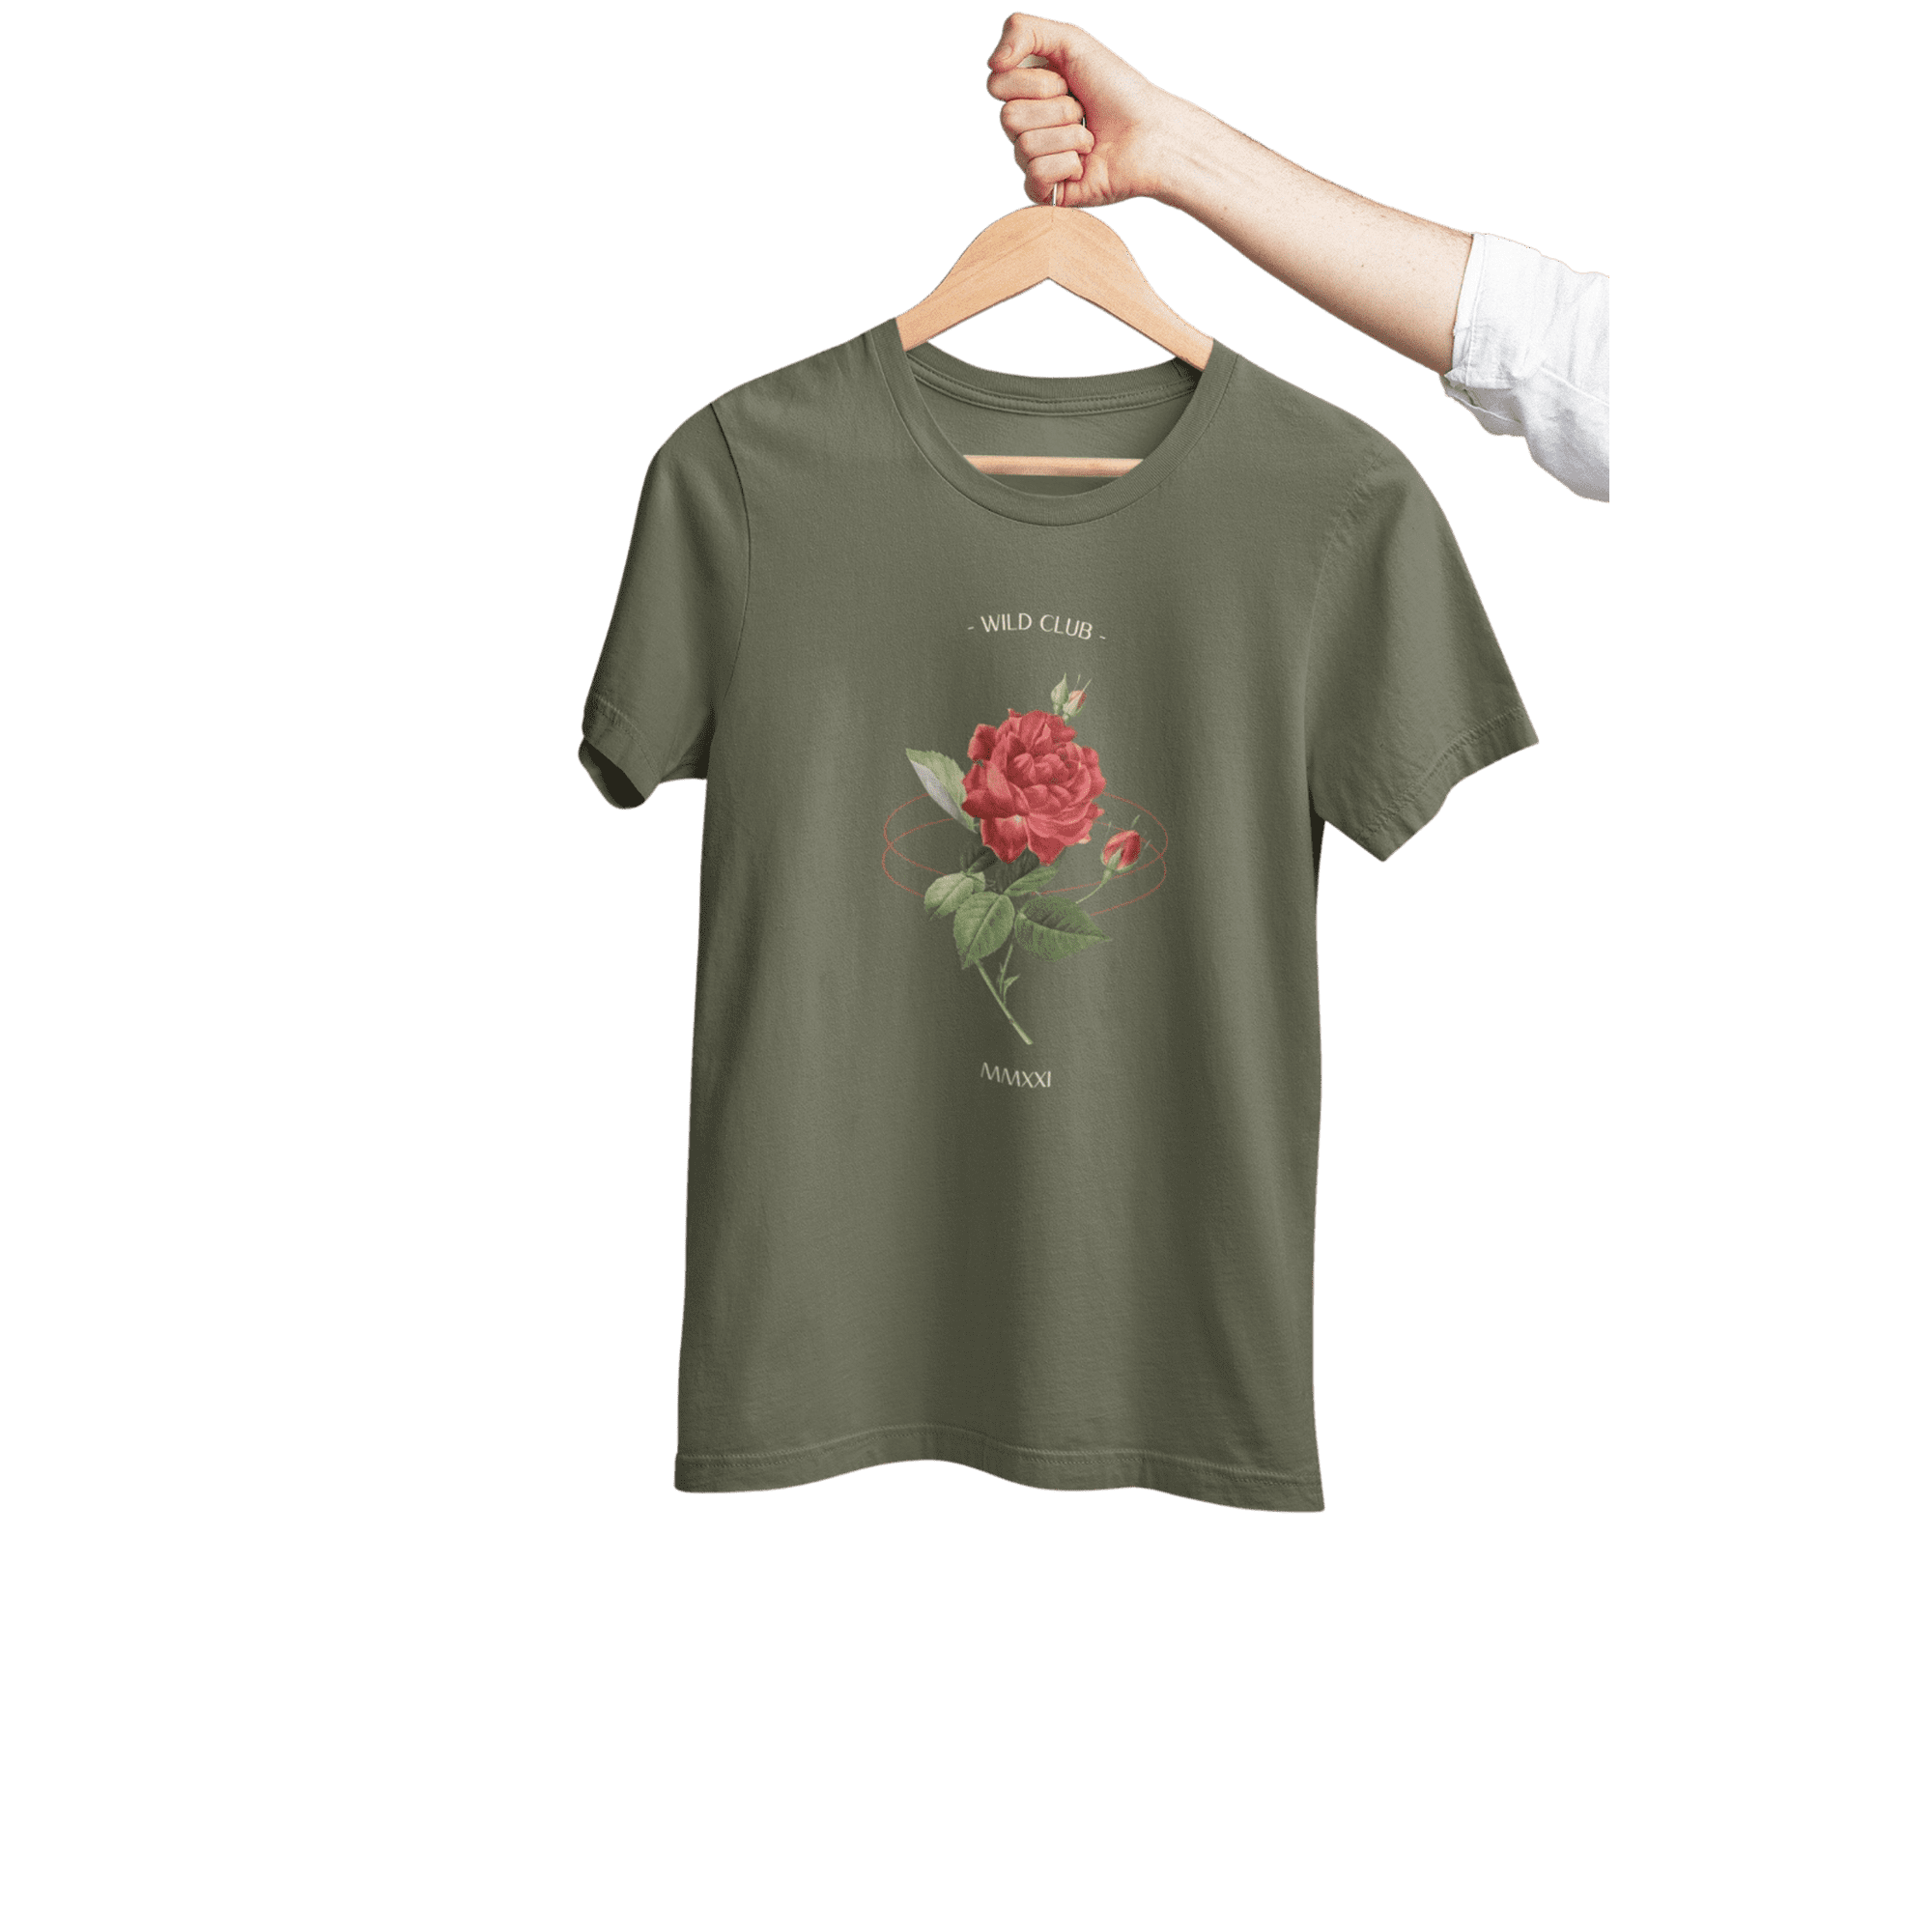 kiMaran Flower T-Shirt Red Rose Clipart WILD CLUB MMXXI Unisex Short Sleeve  Tee (Military Green XL)